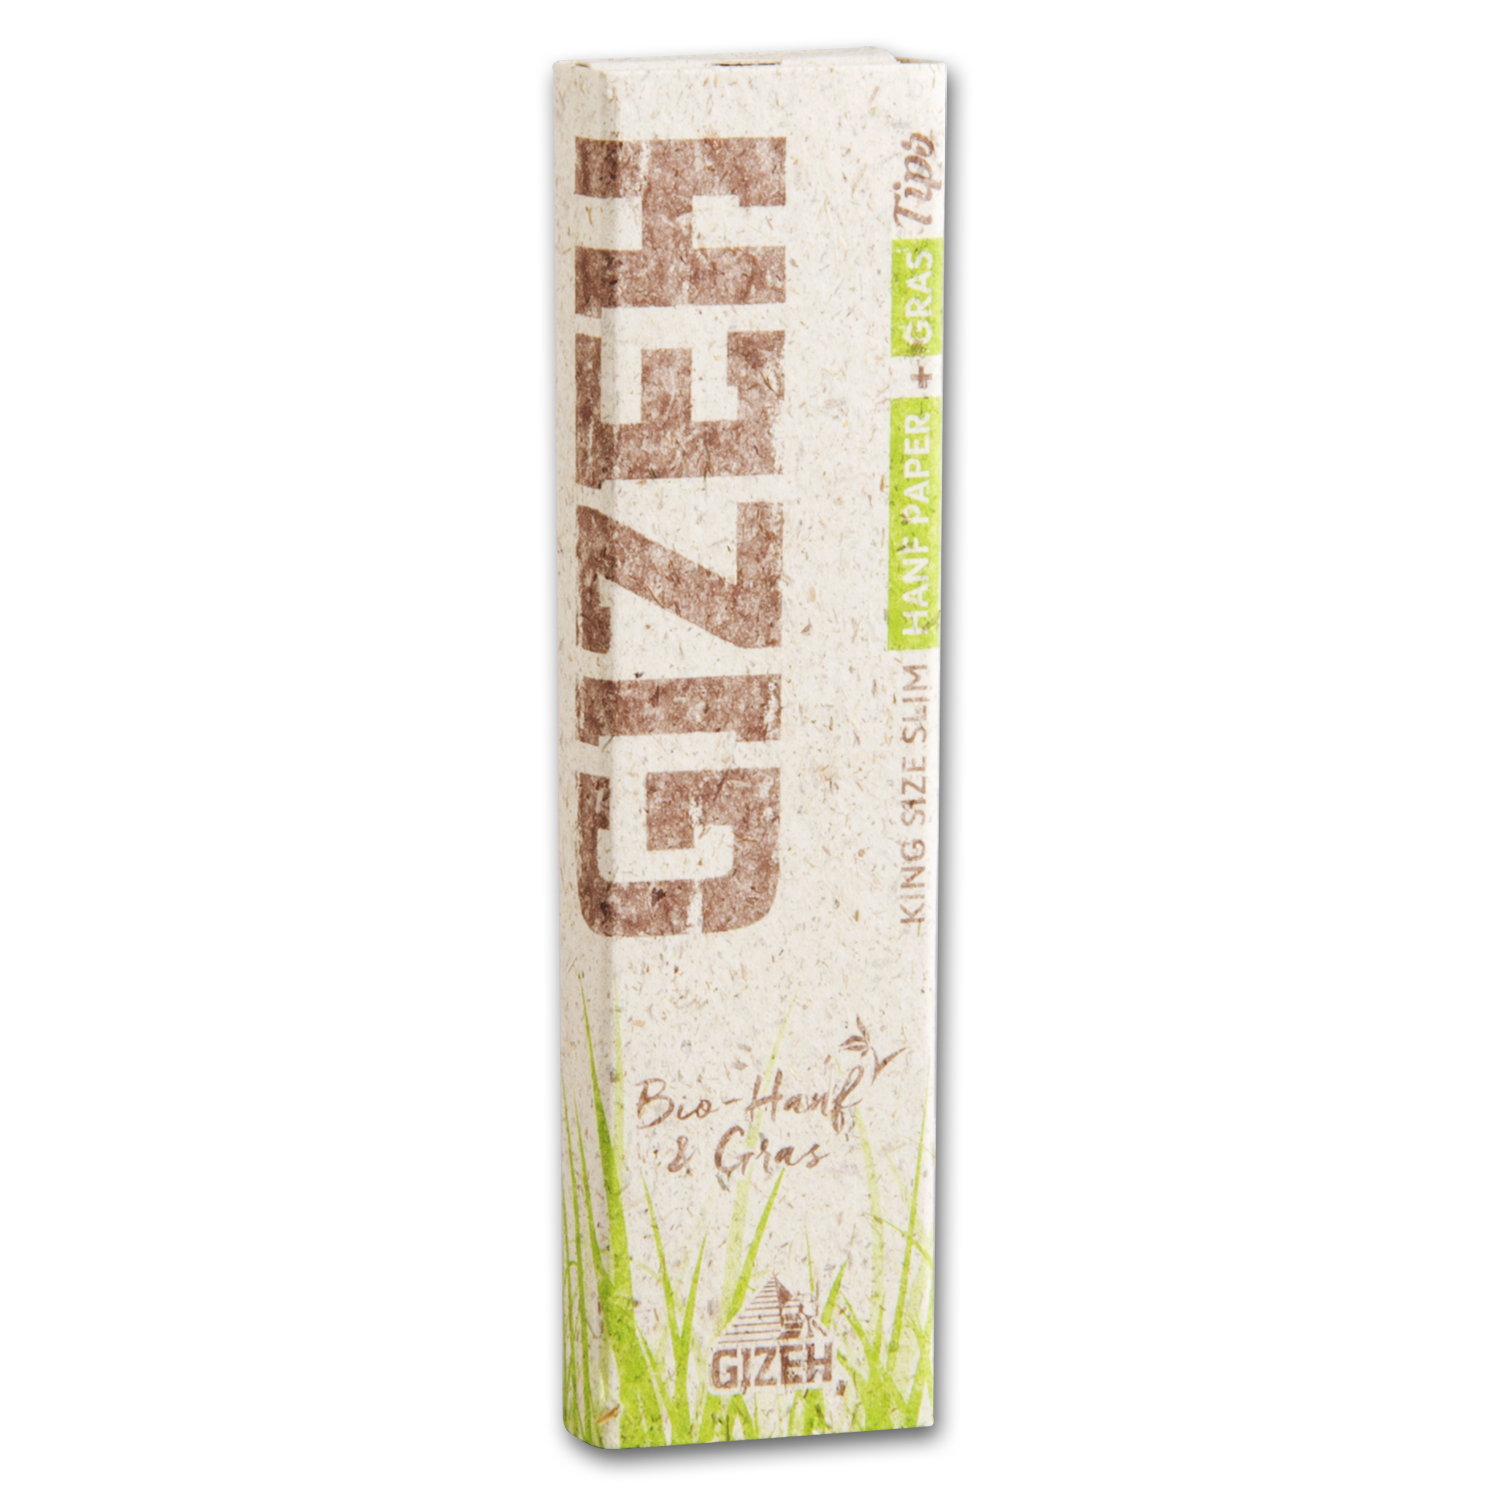 GIZEH Hanf + Gras King Size Slim + Tips 1x34 Stück